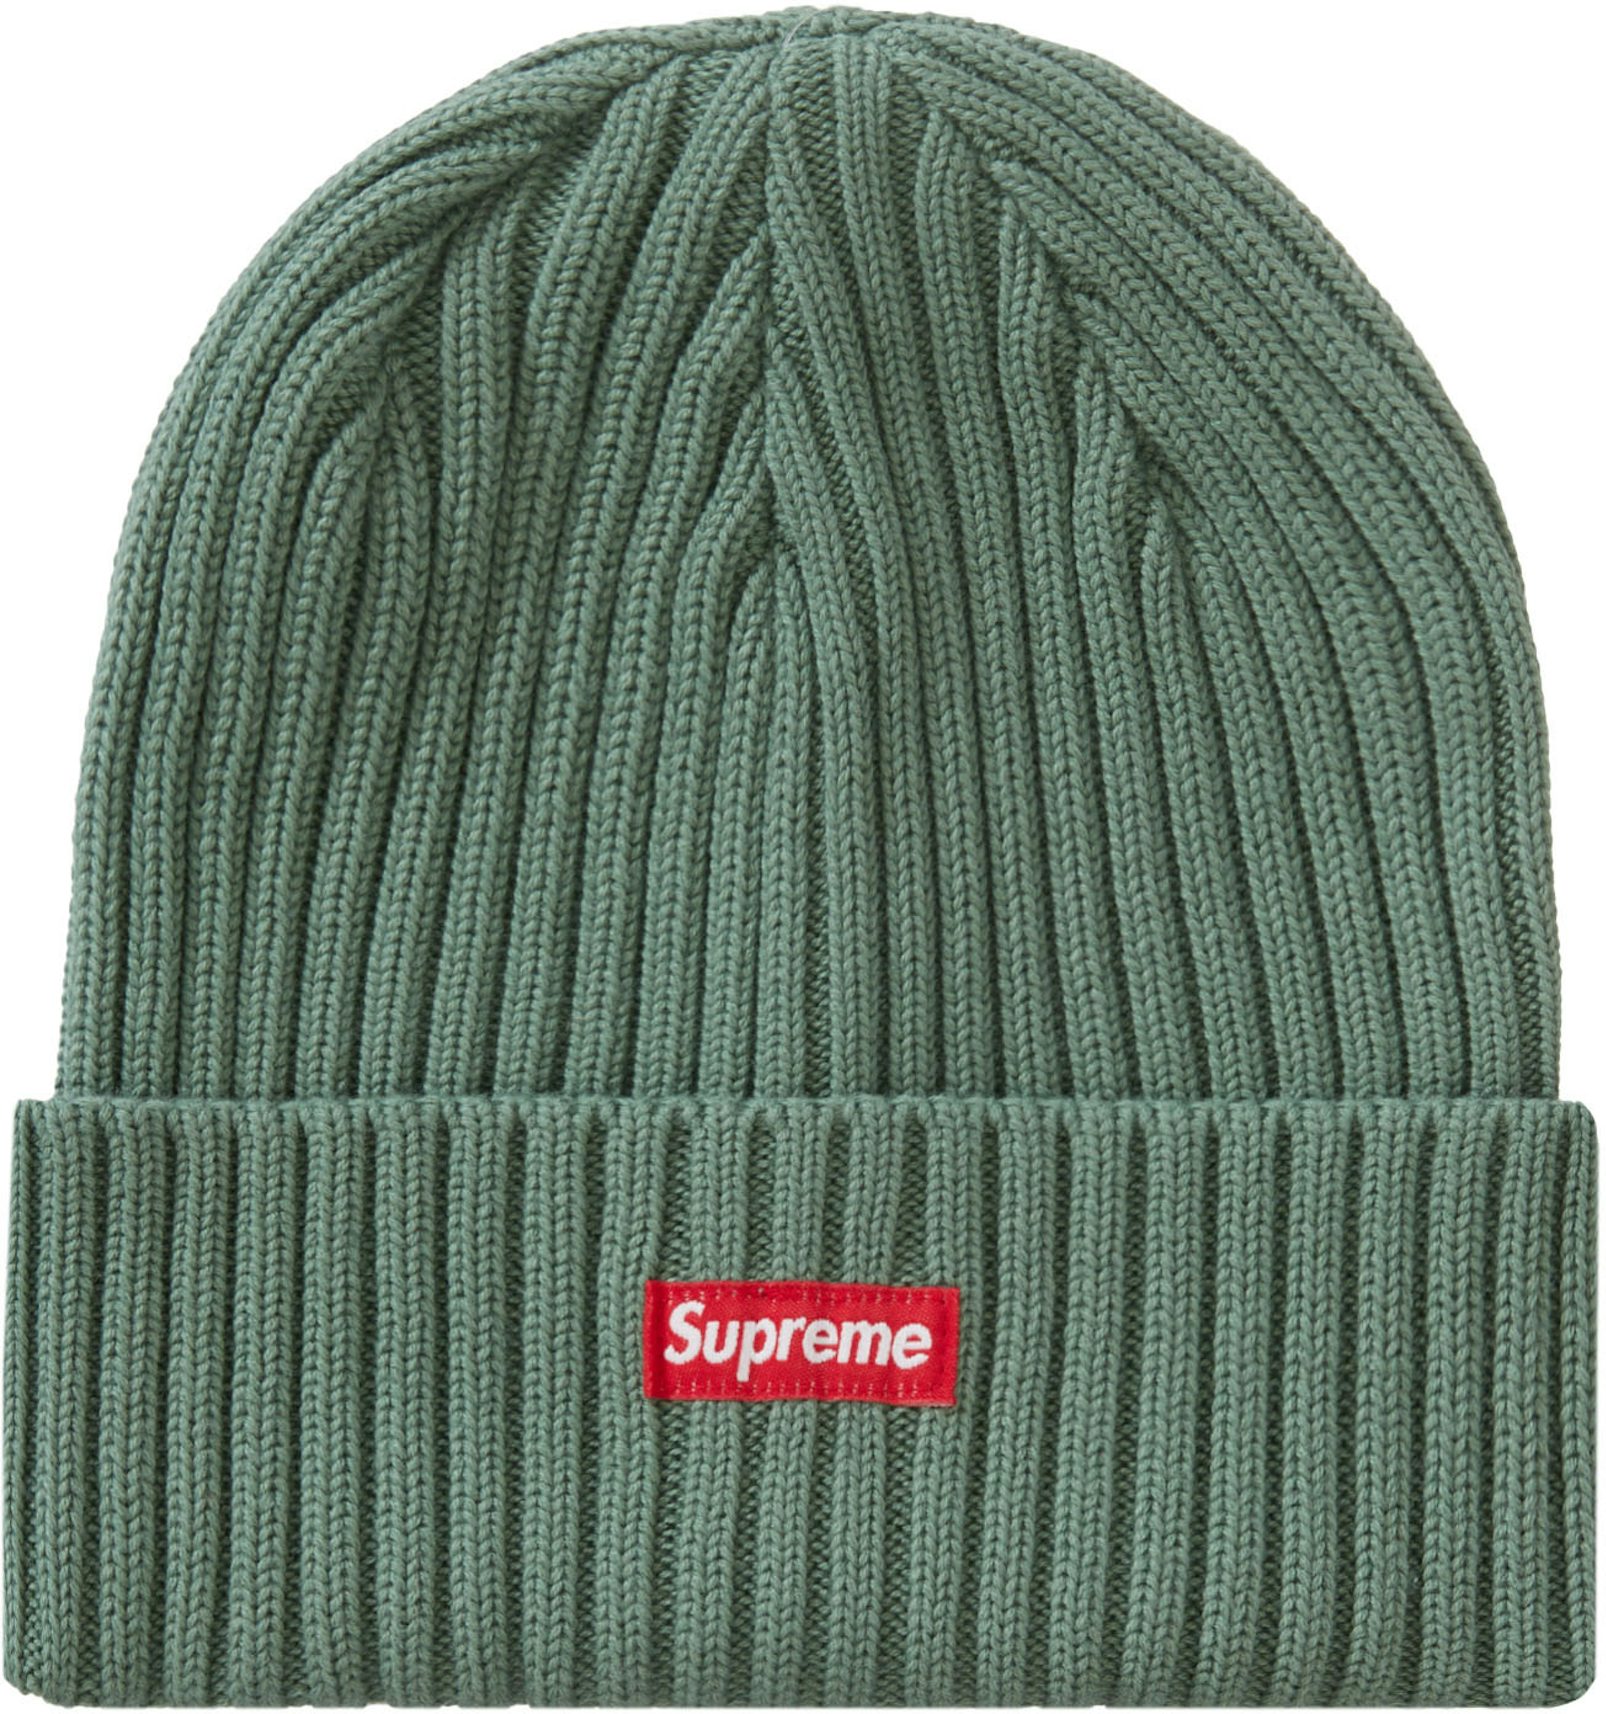 Supreme overdyed beanie/knit - Gem